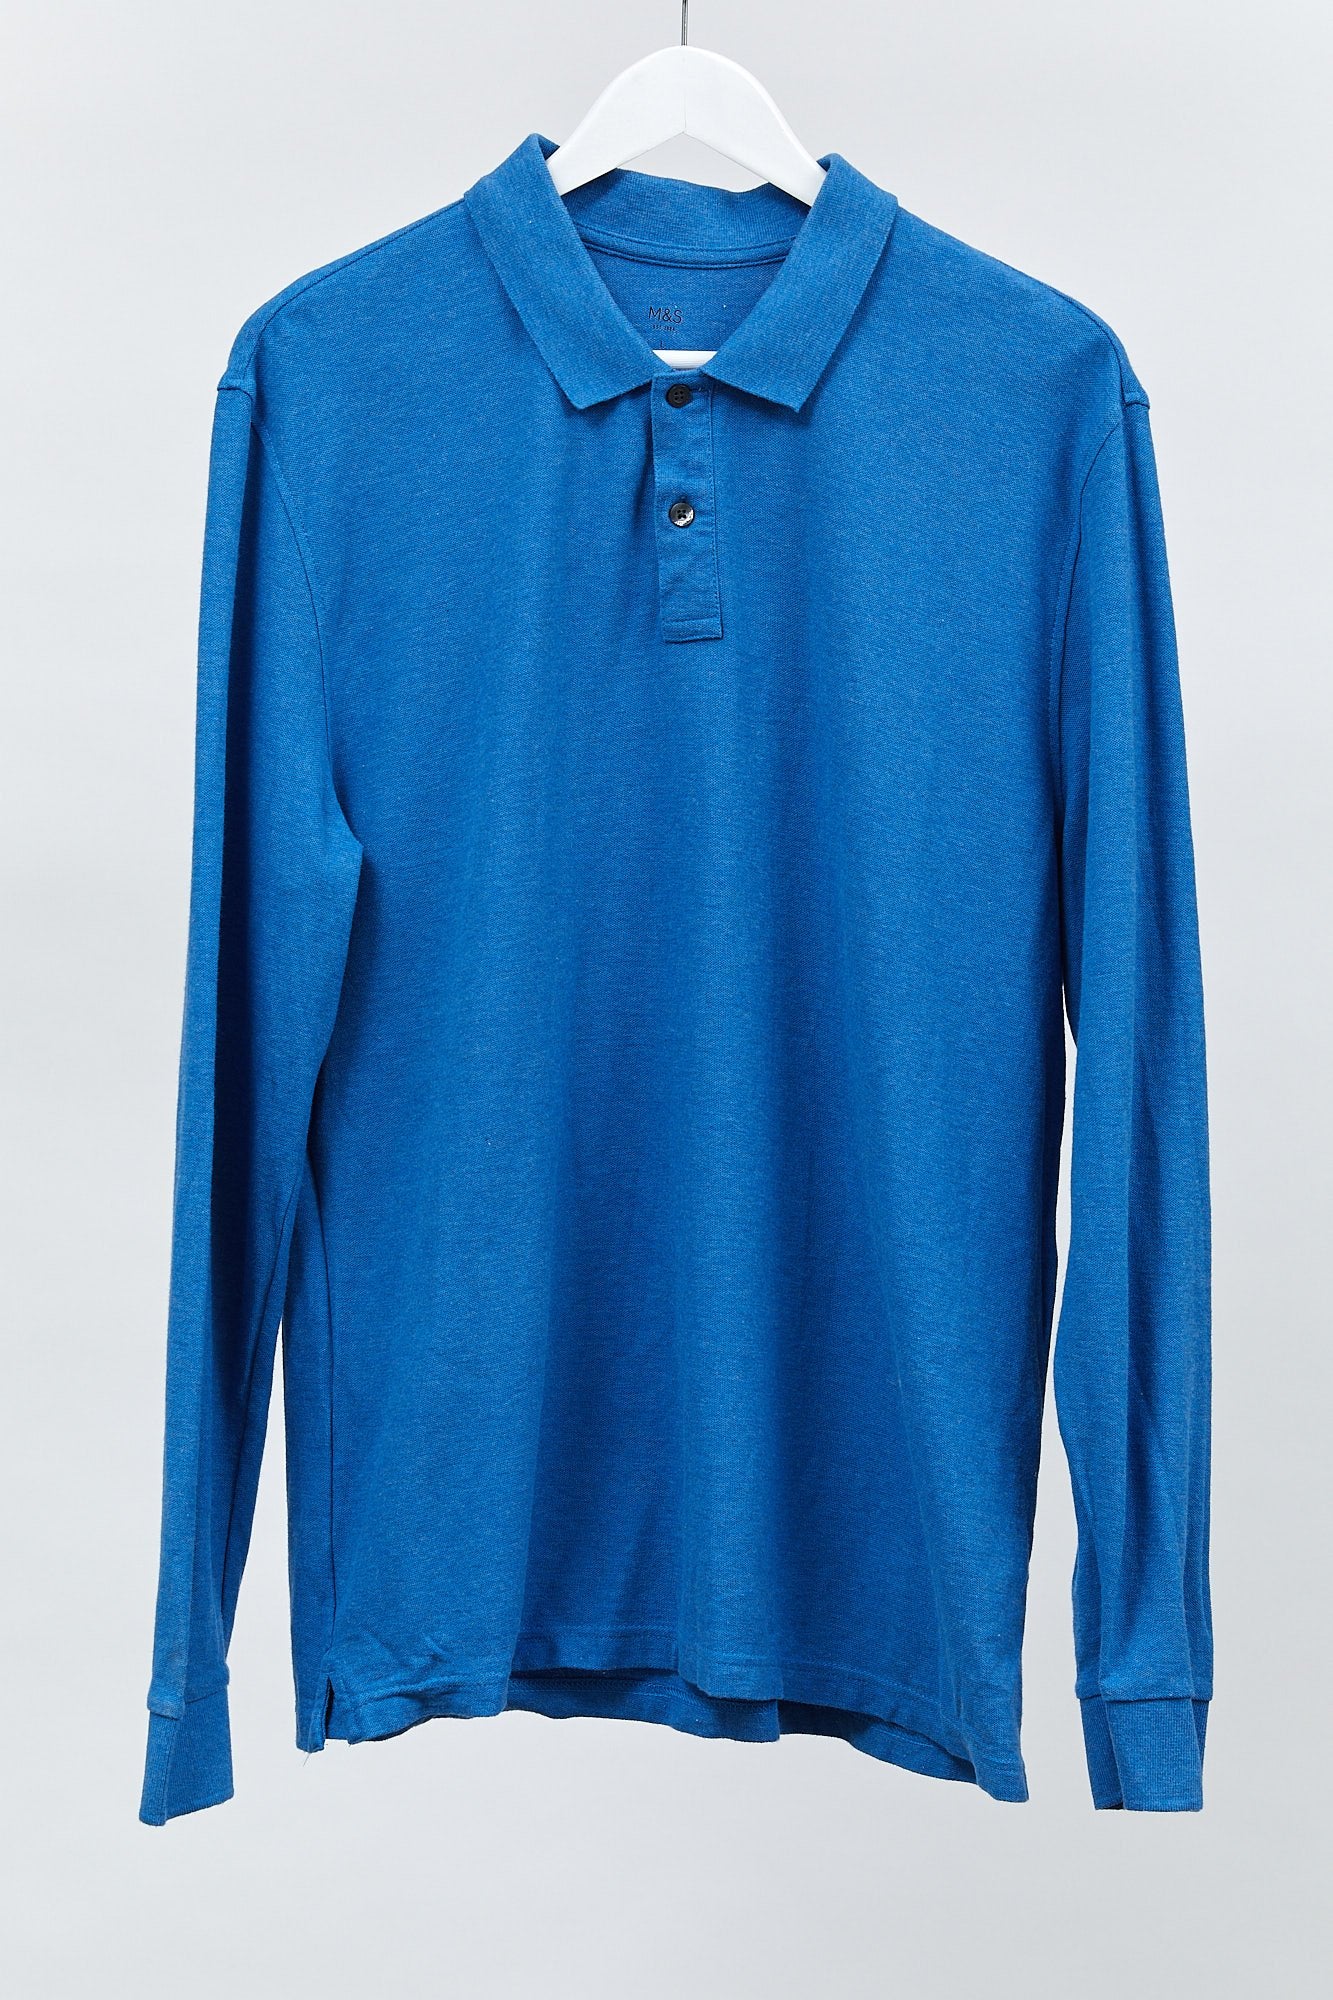 Mens Blue Long Sleeved Polo Shirt: Size Large